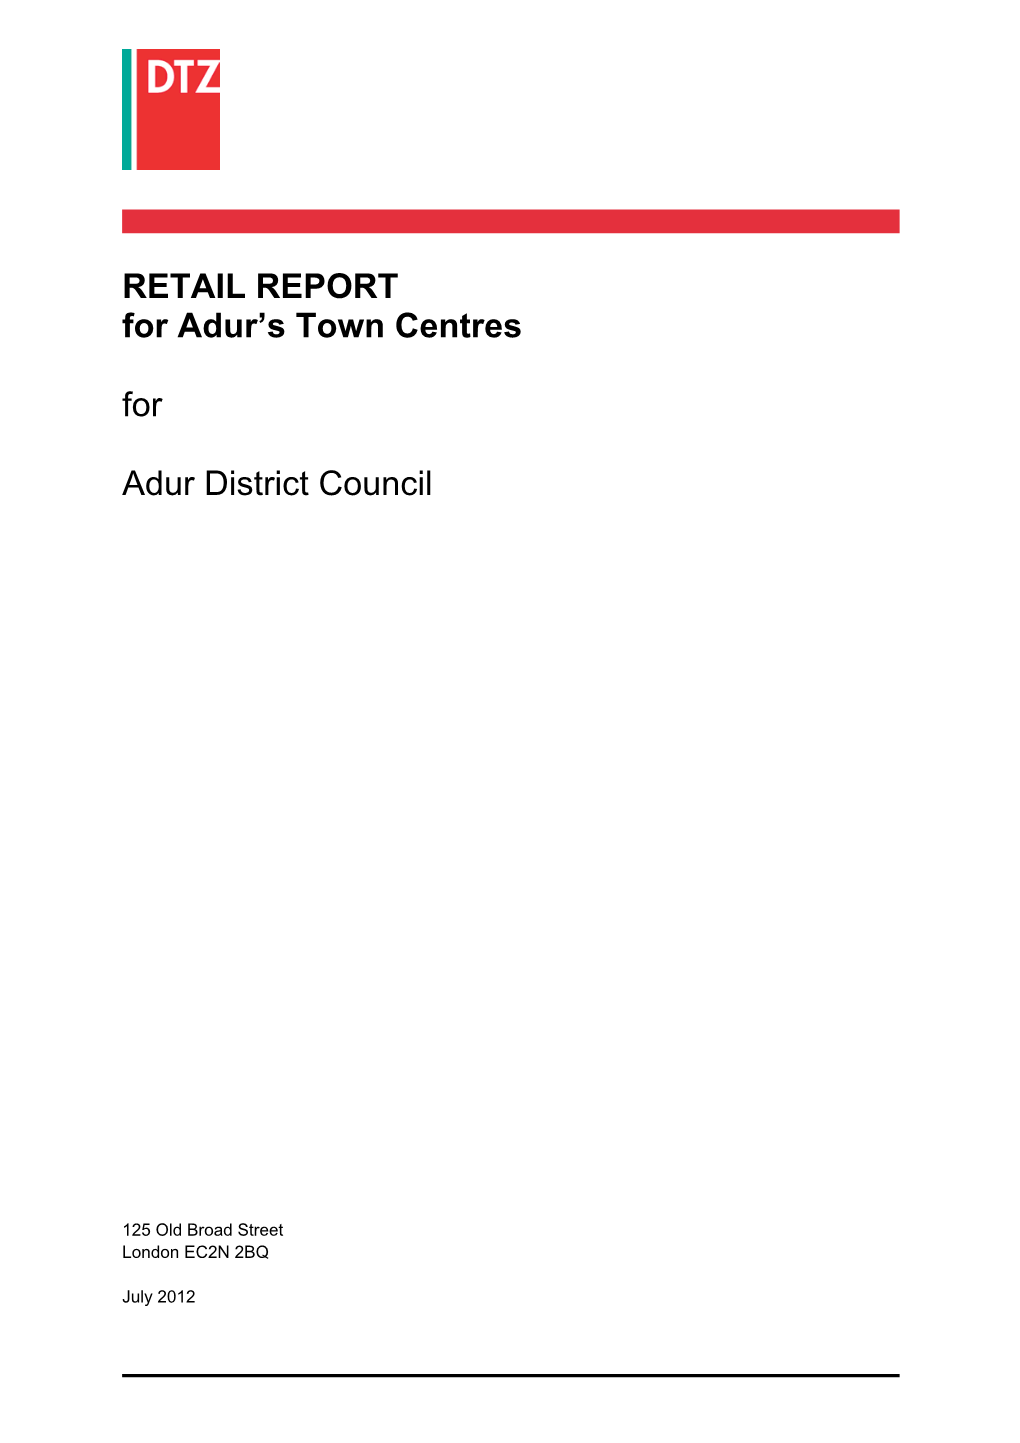 RETAIL REPORT for Adur's Town Centres for Adur District Council